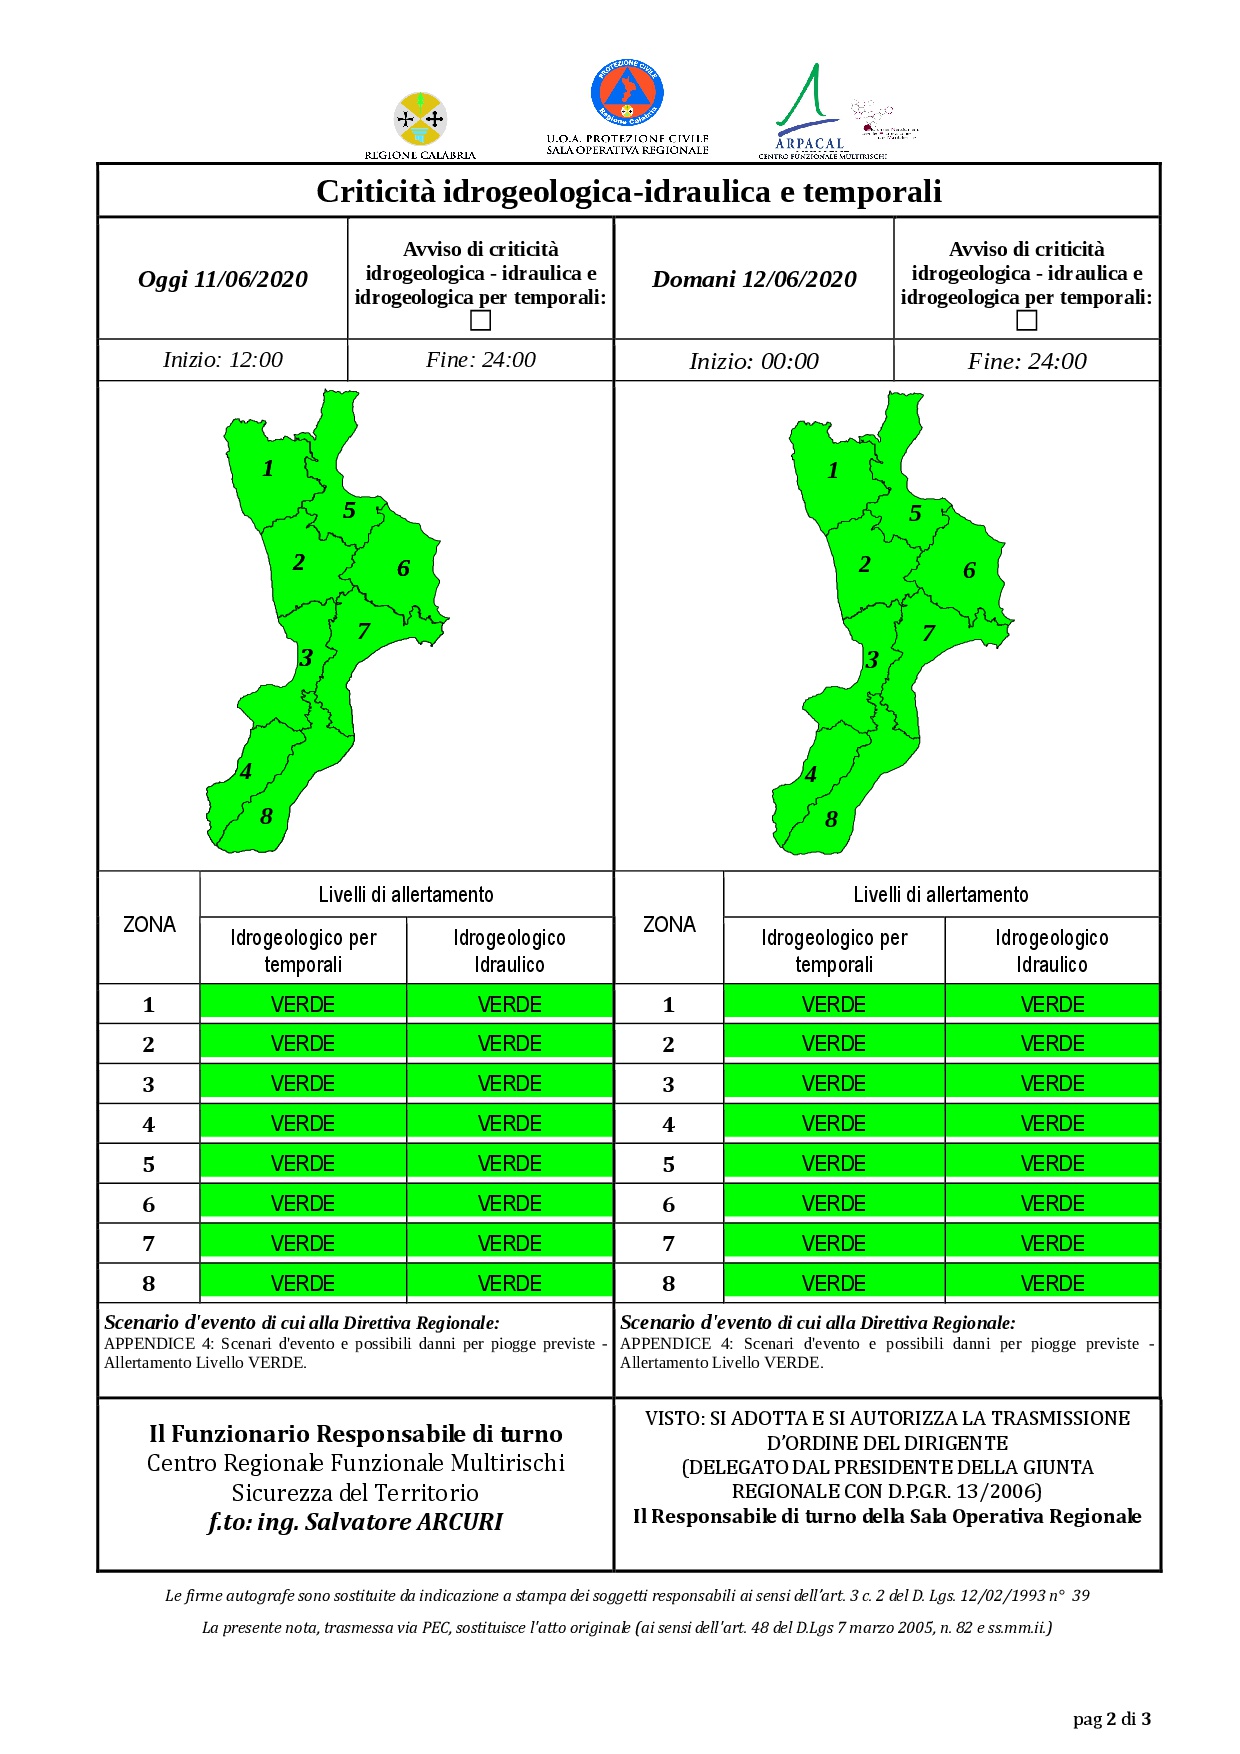 Criticità idrogeologica-idraulica e temporali in Calabria 11-06-2020